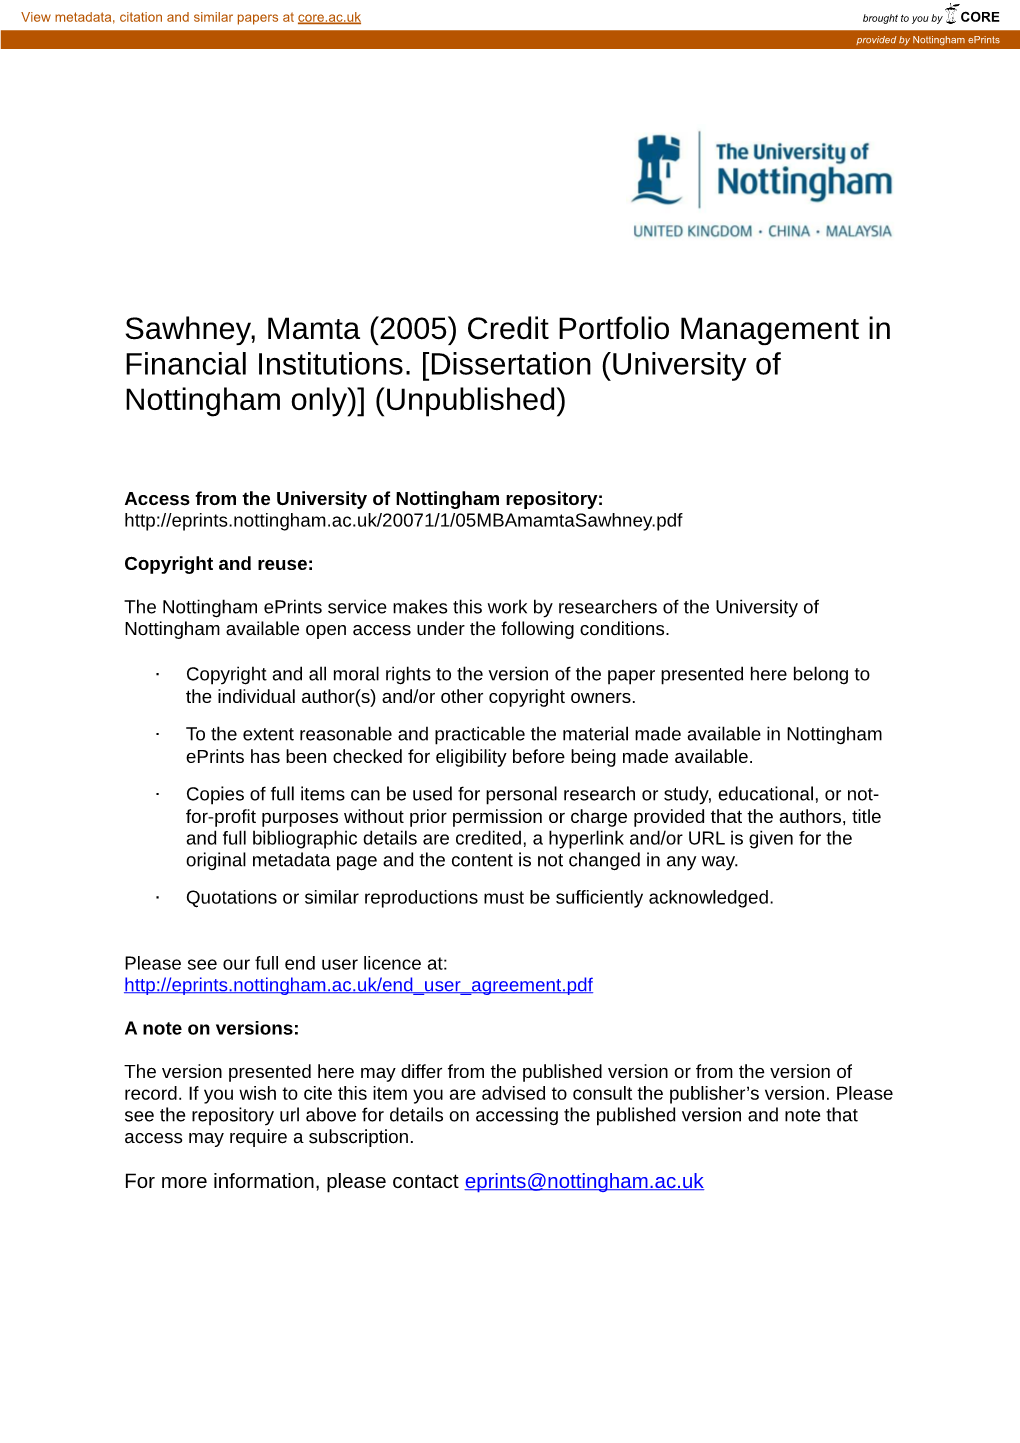 Sawhney, Mamta (2005) Credit Portfolio Management in Financial Institutions. [Dissertation (University of Nottingham Only)] (Unpublished)